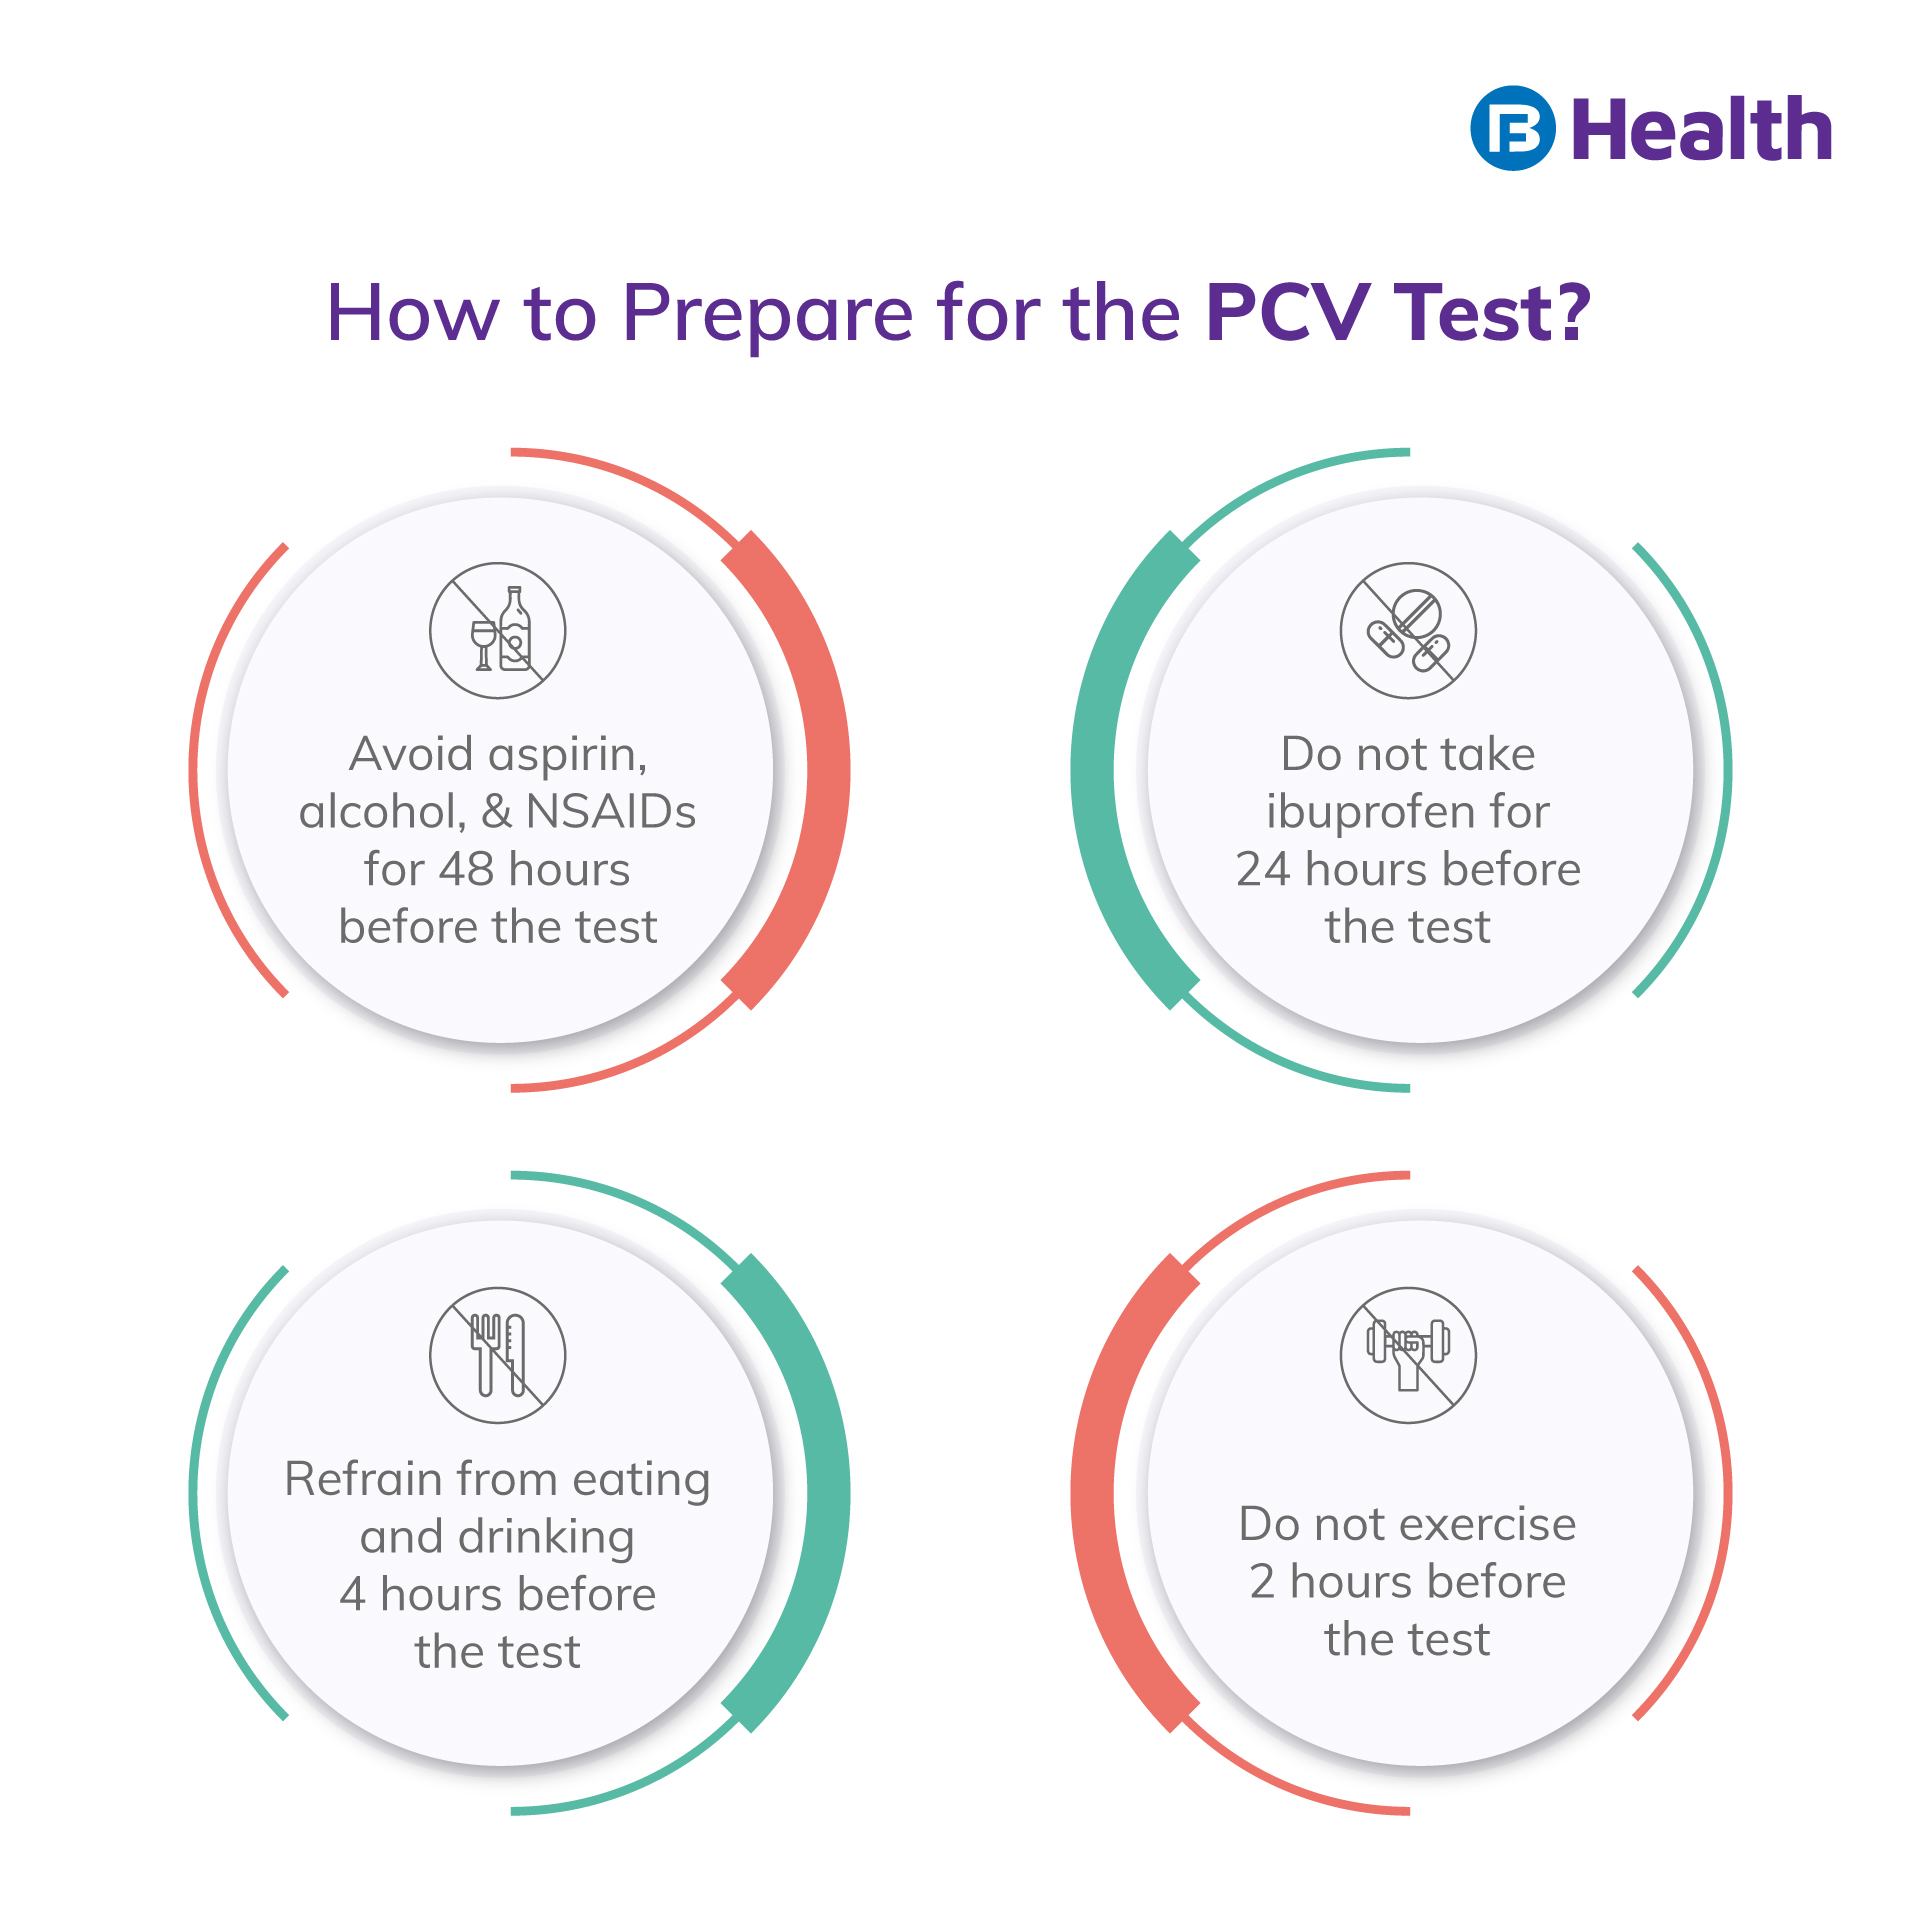 pcv case study practice tests